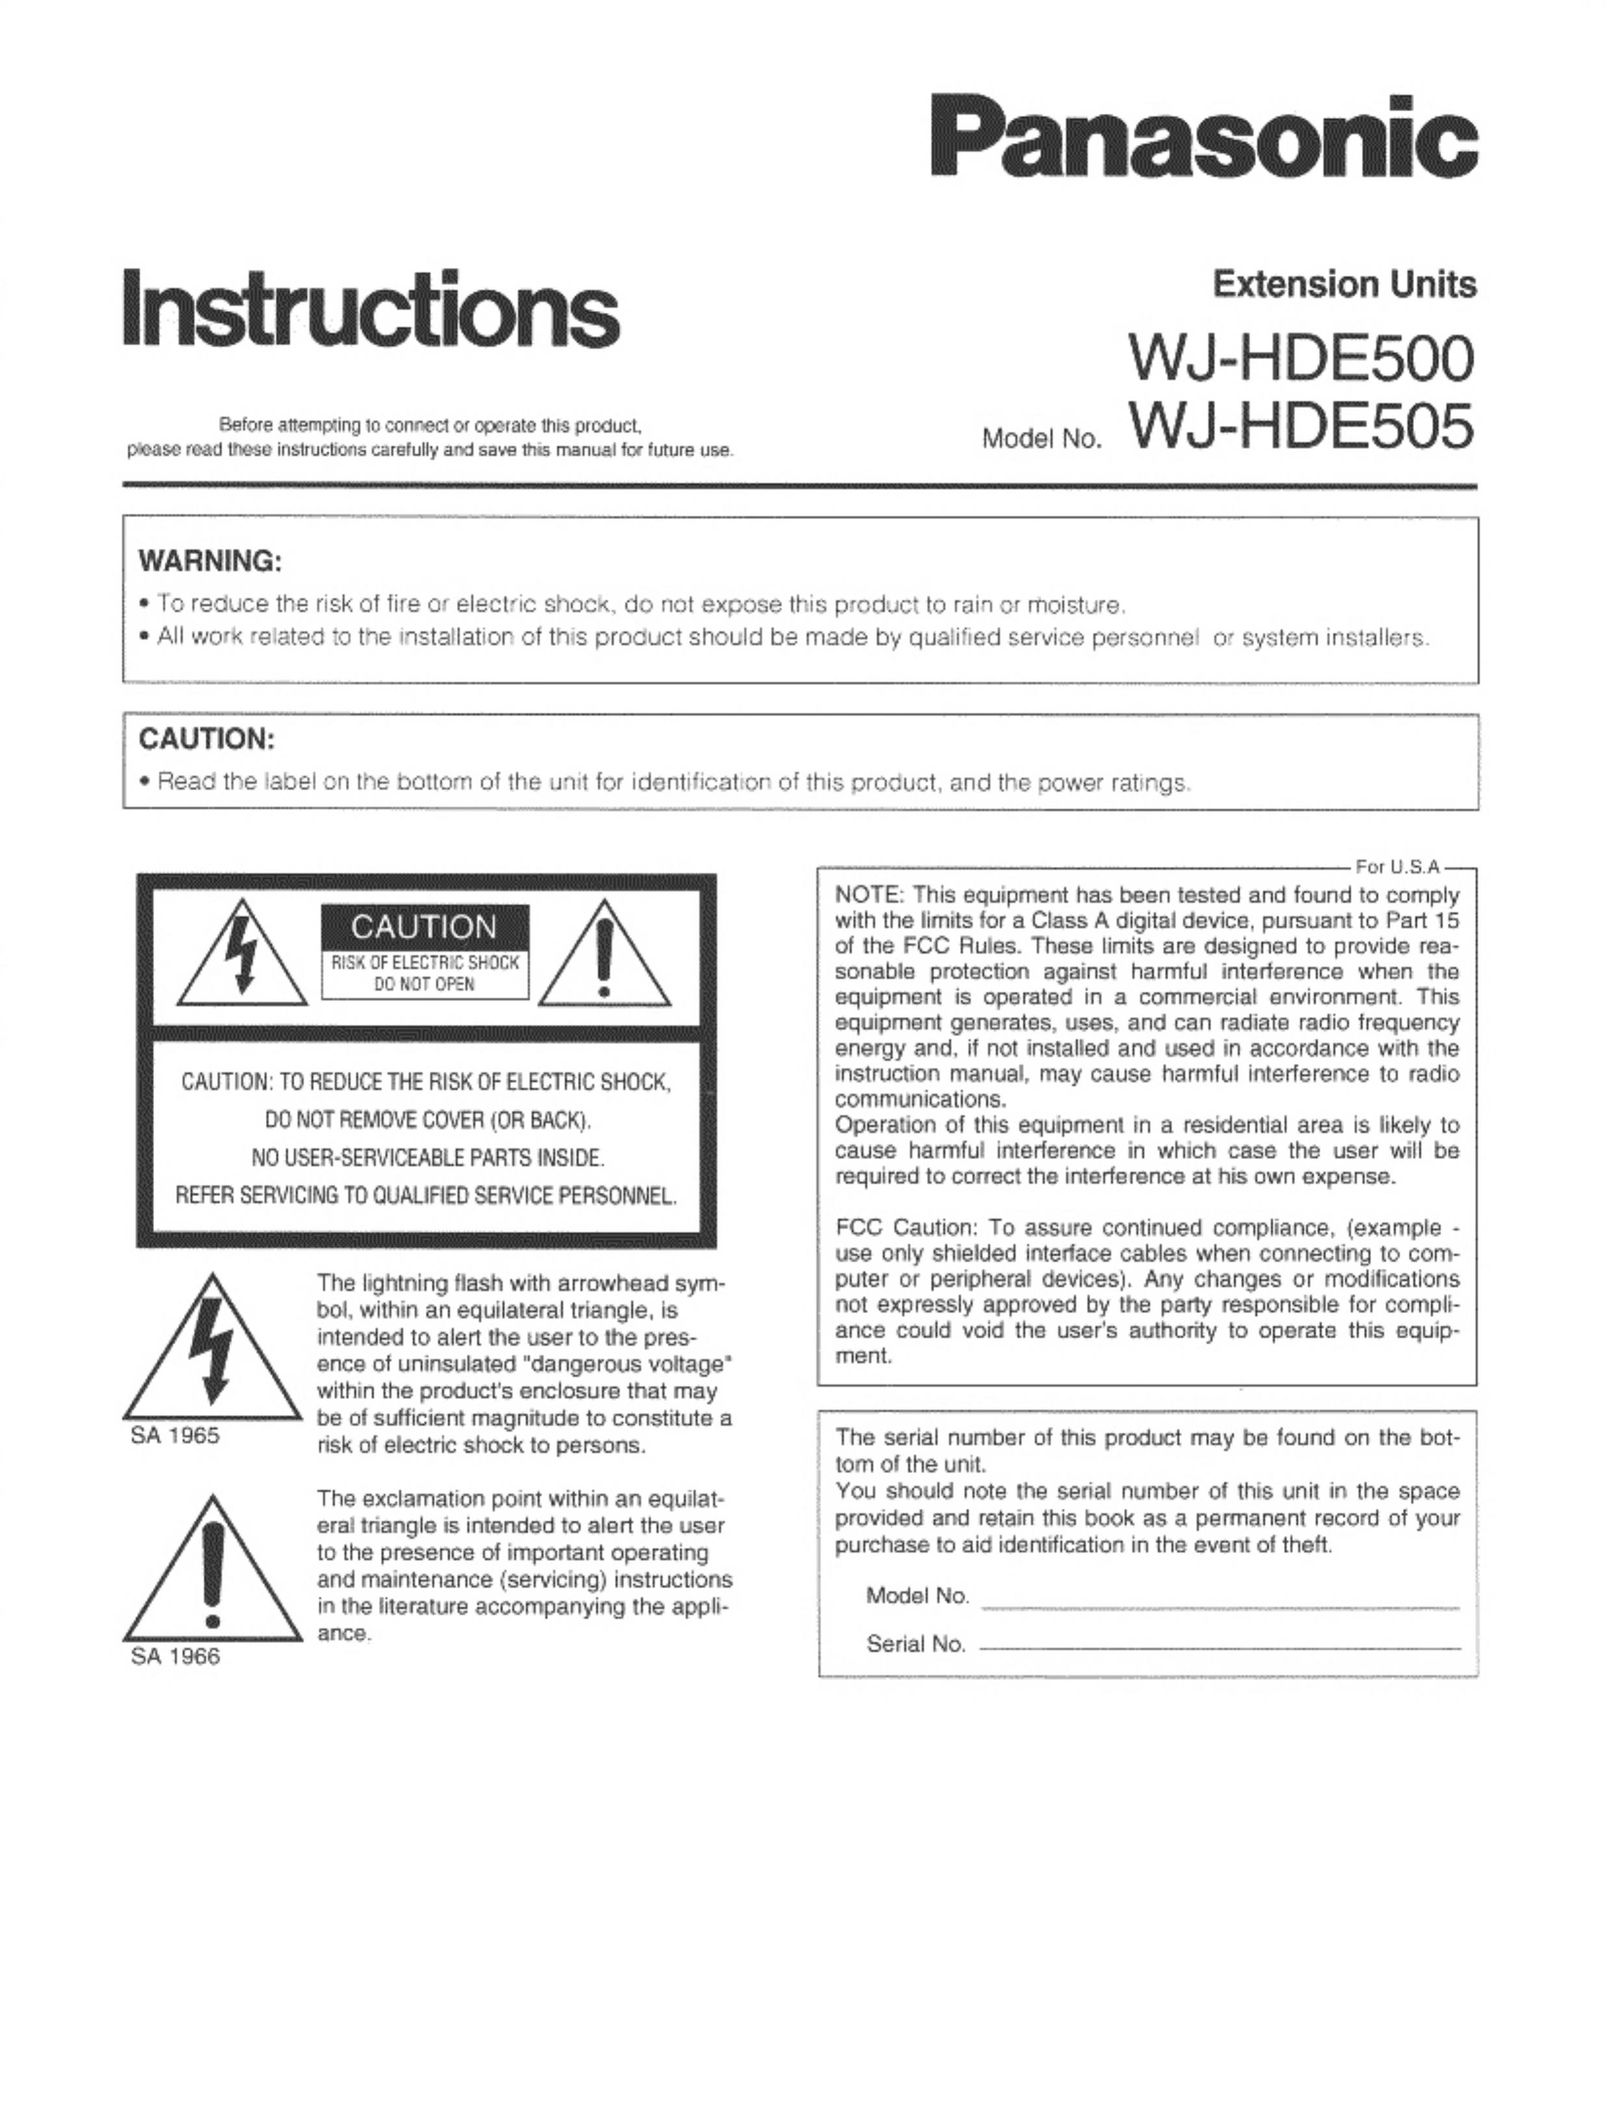 Panasonic WJ-HDE500 Cable Box User Manual